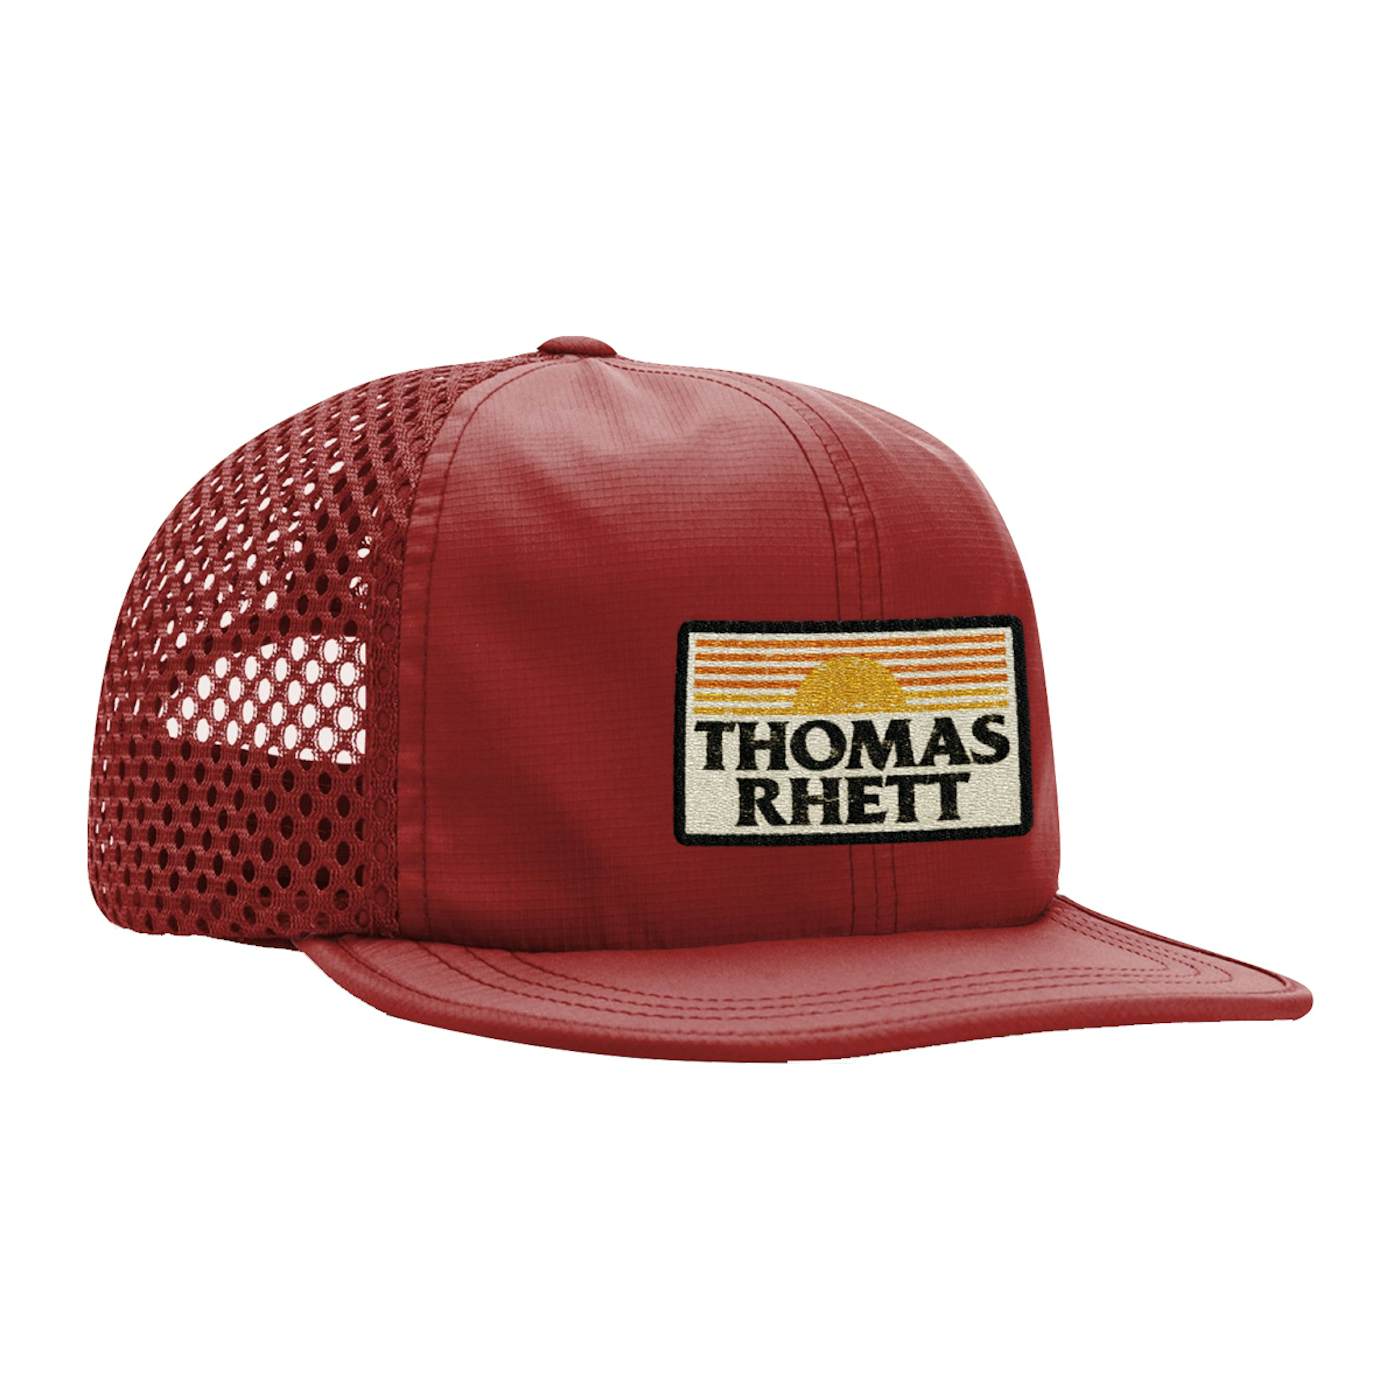 Thomas Rhett Sunset Cardinal Mesh Hat